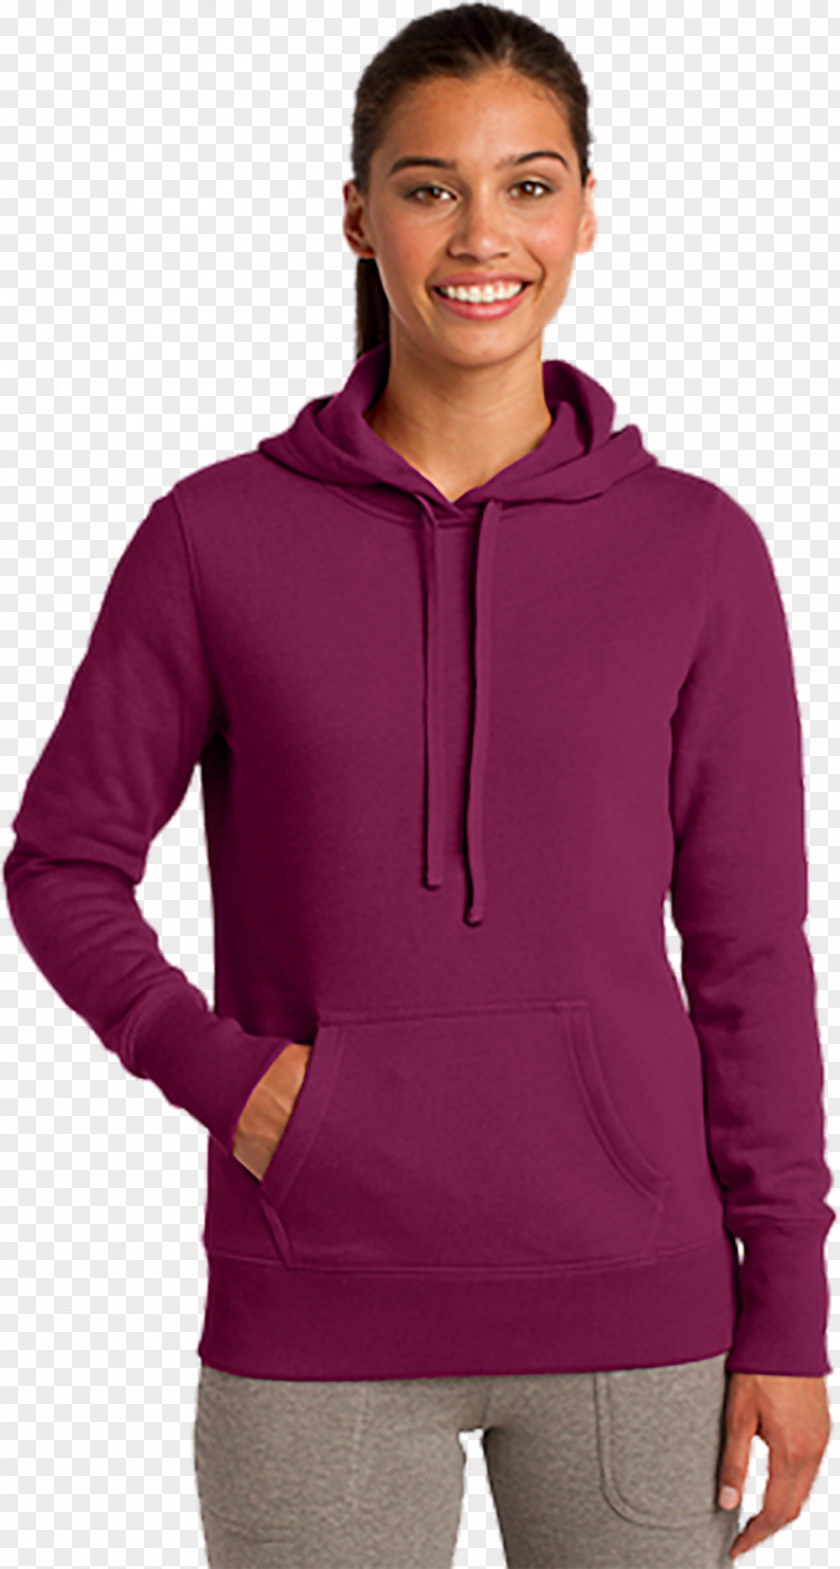 Garments Model Hoodie T-shirt Jumper Clothing Sweater PNG